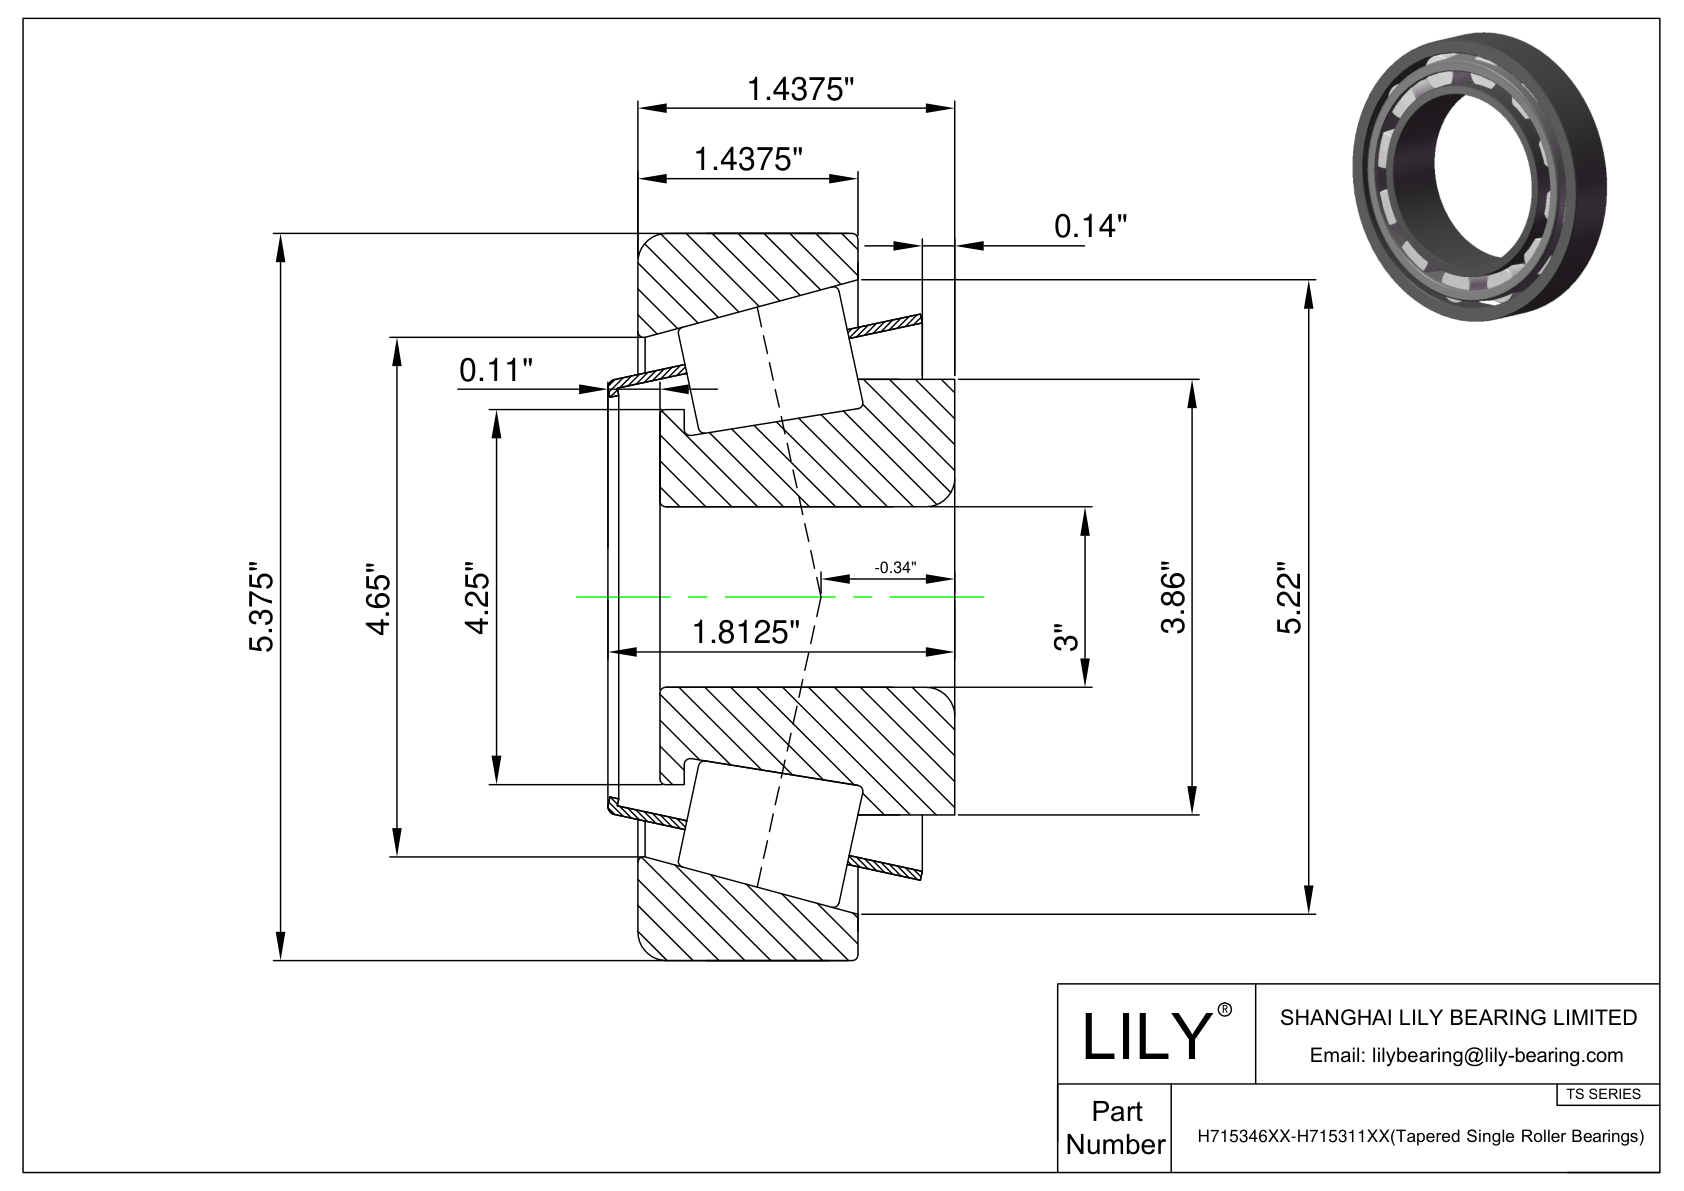 H715346XX-H715311XX TS系列(圆锥单滚子轴承)(英制) CAD图形